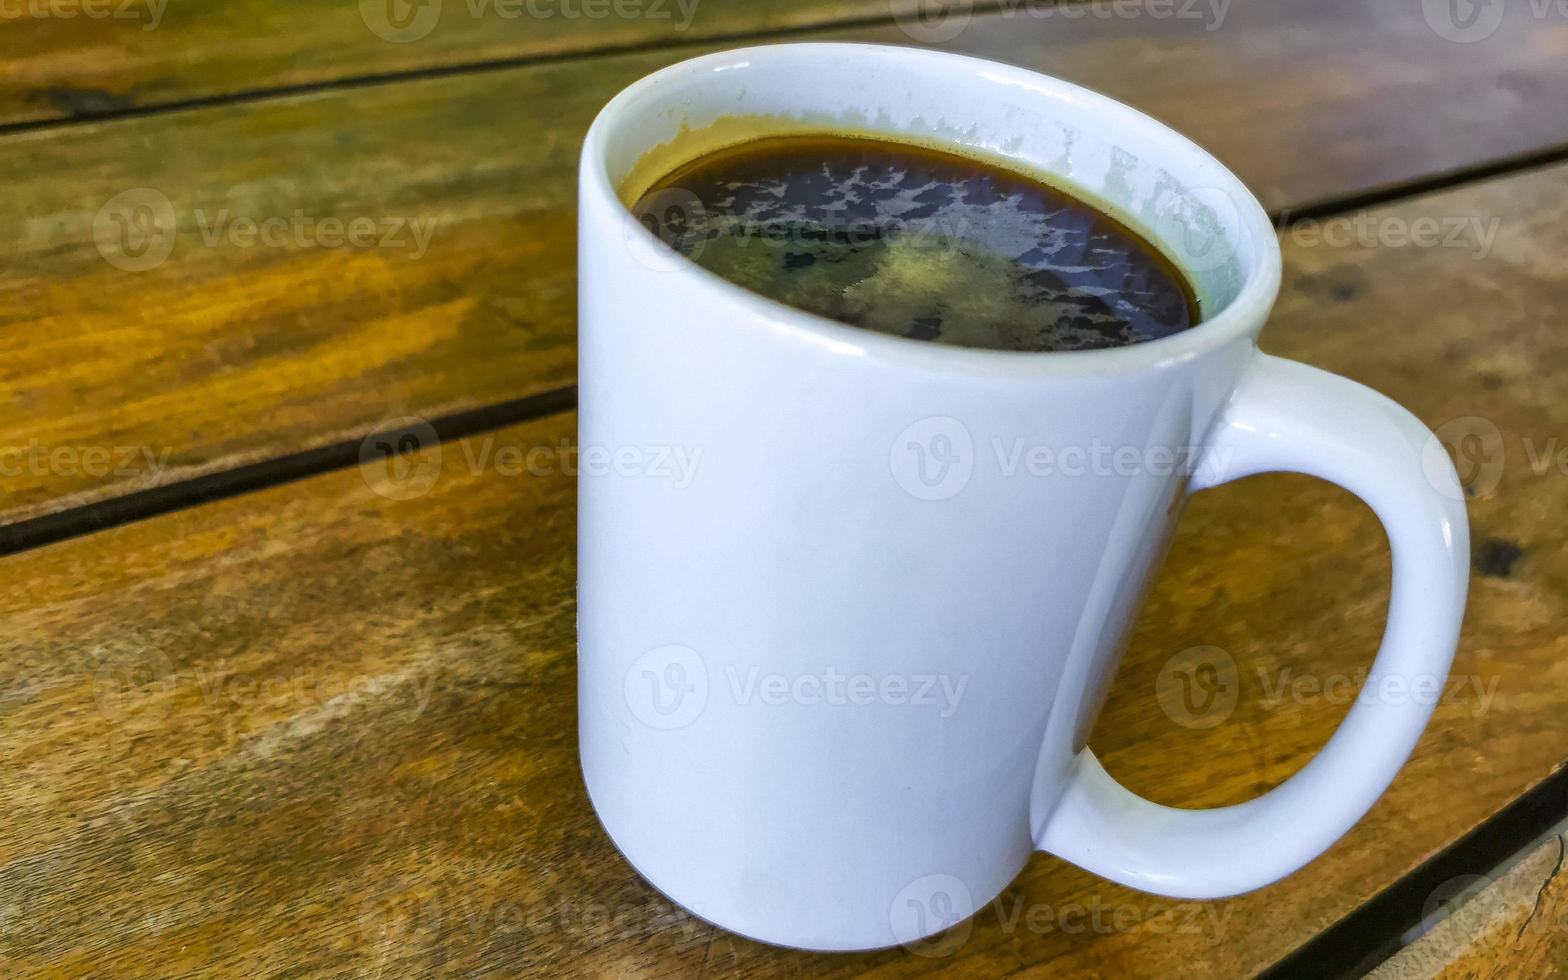 tasse americano schwarzer kaffee im restaurant mexiko. foto